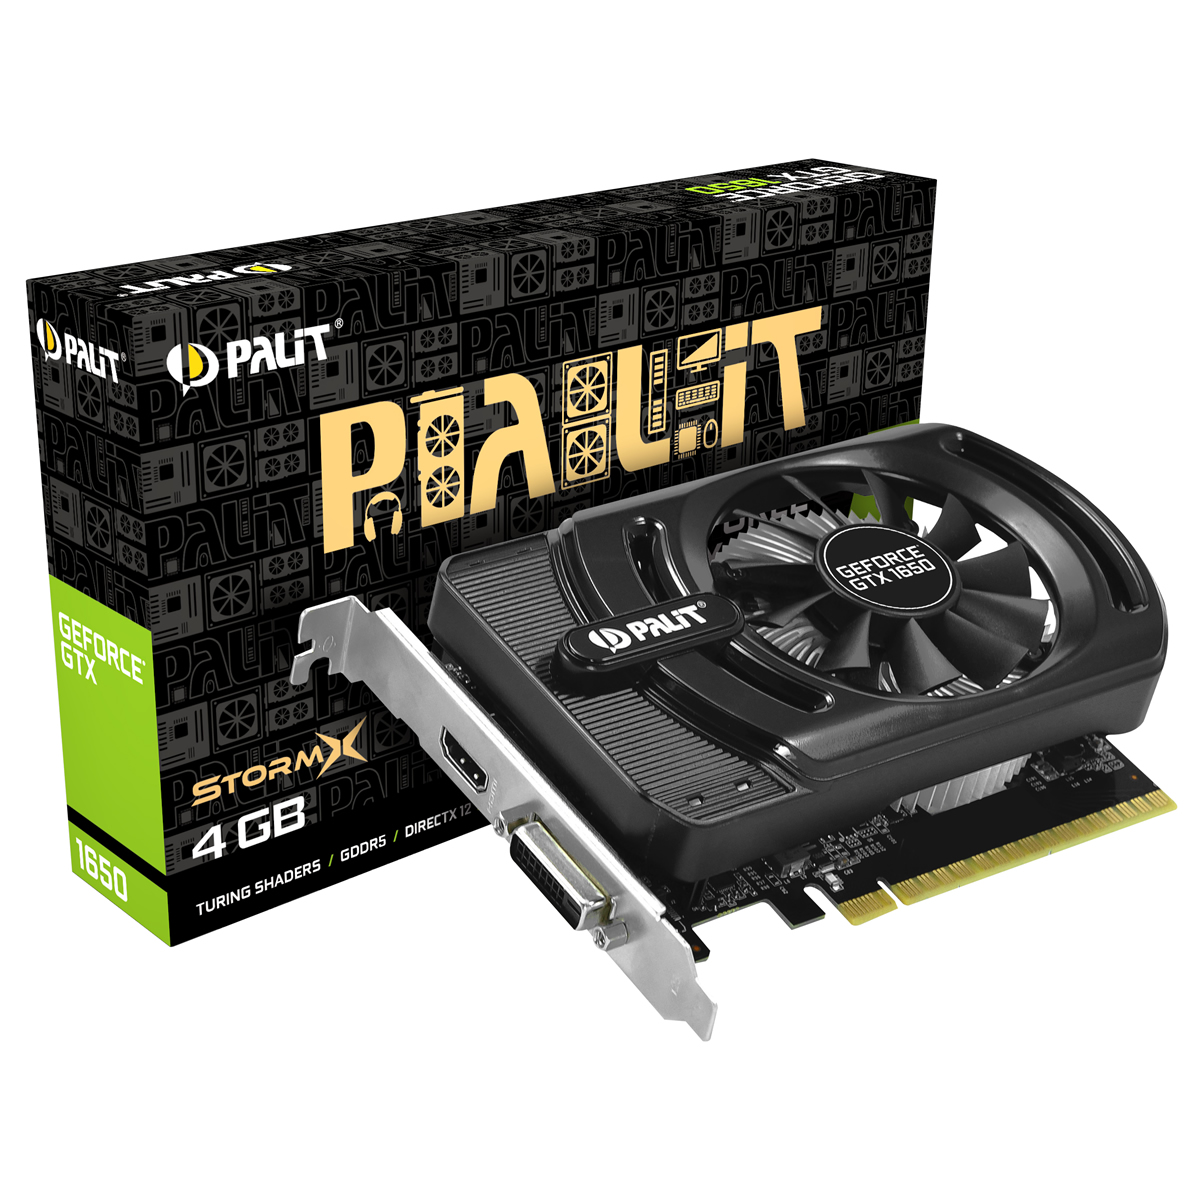 Palit - Palit GeForce GTX 1650 StormX 4096MB GDDR5 PCI-Express Graphics Card